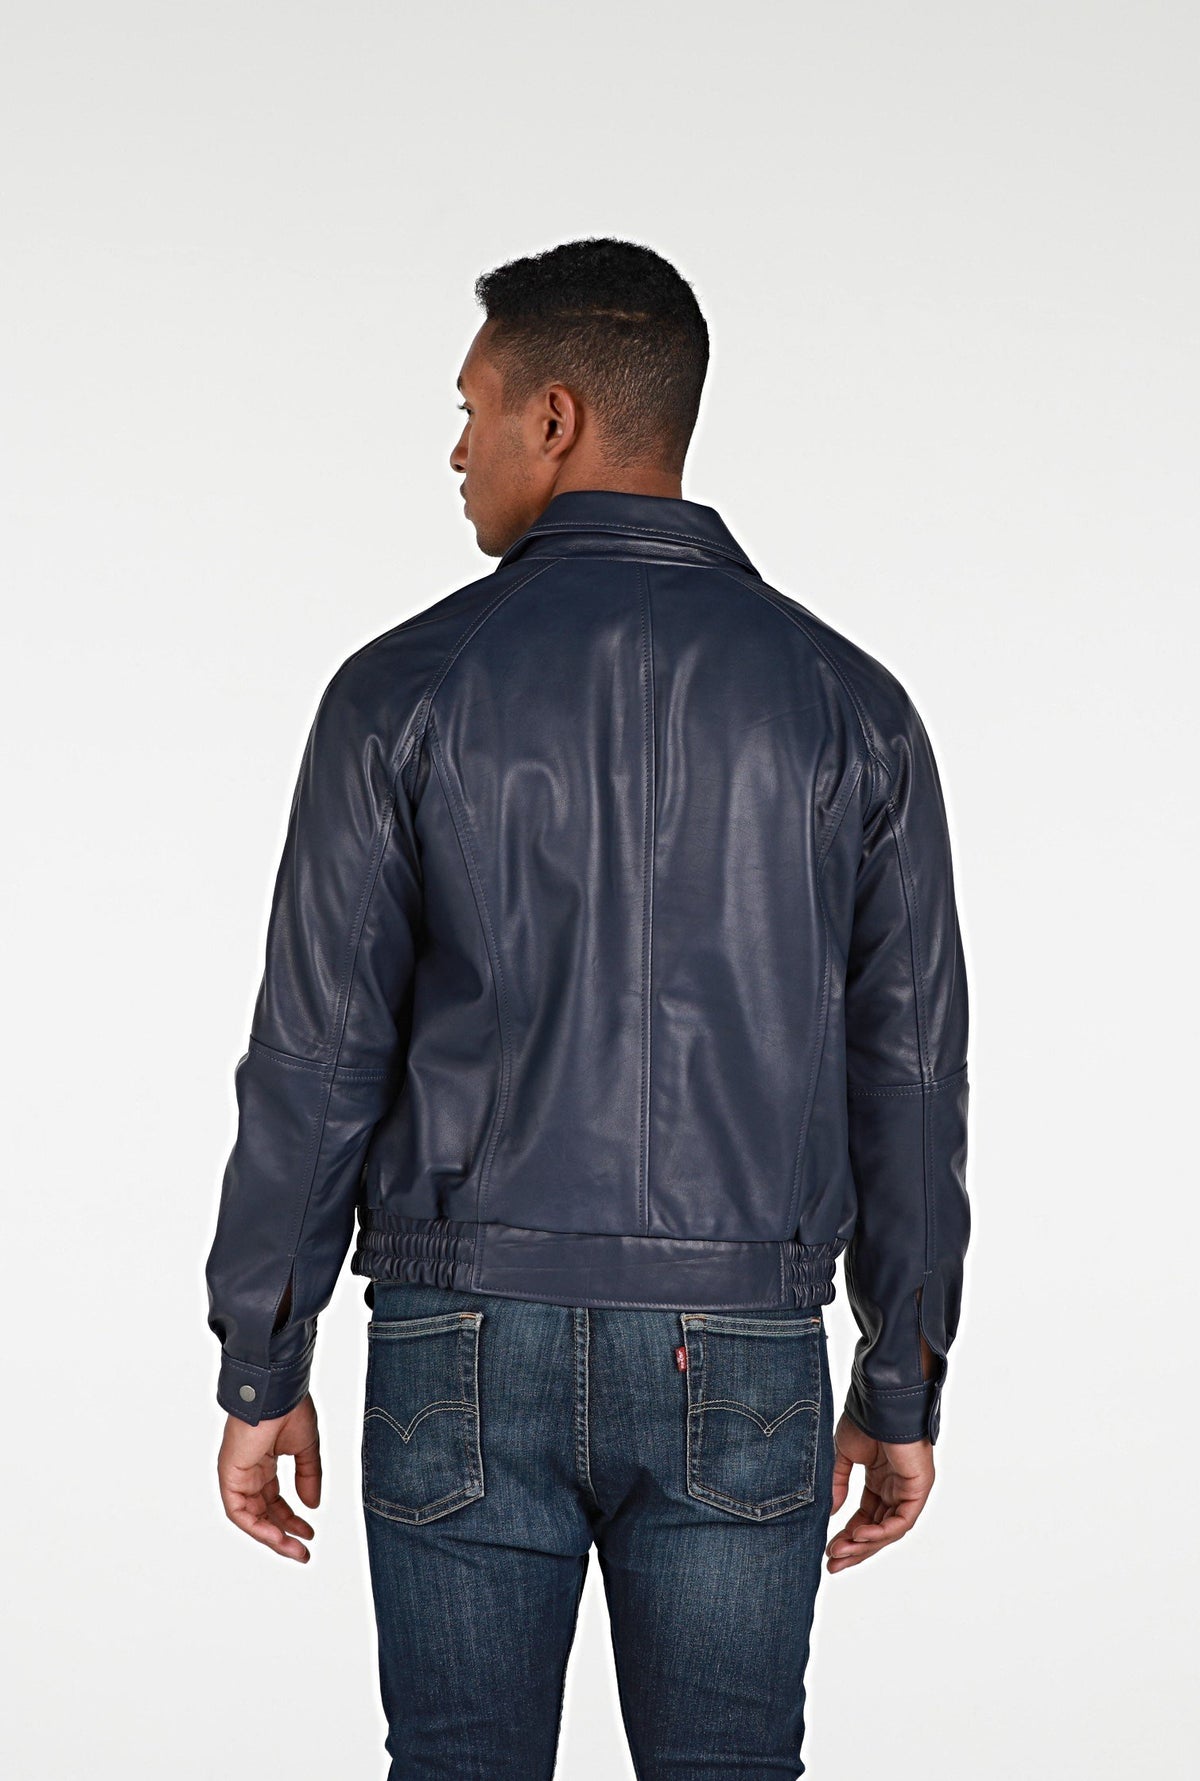 Asher Mens Leather Jacket Angelwarriorfitness.com